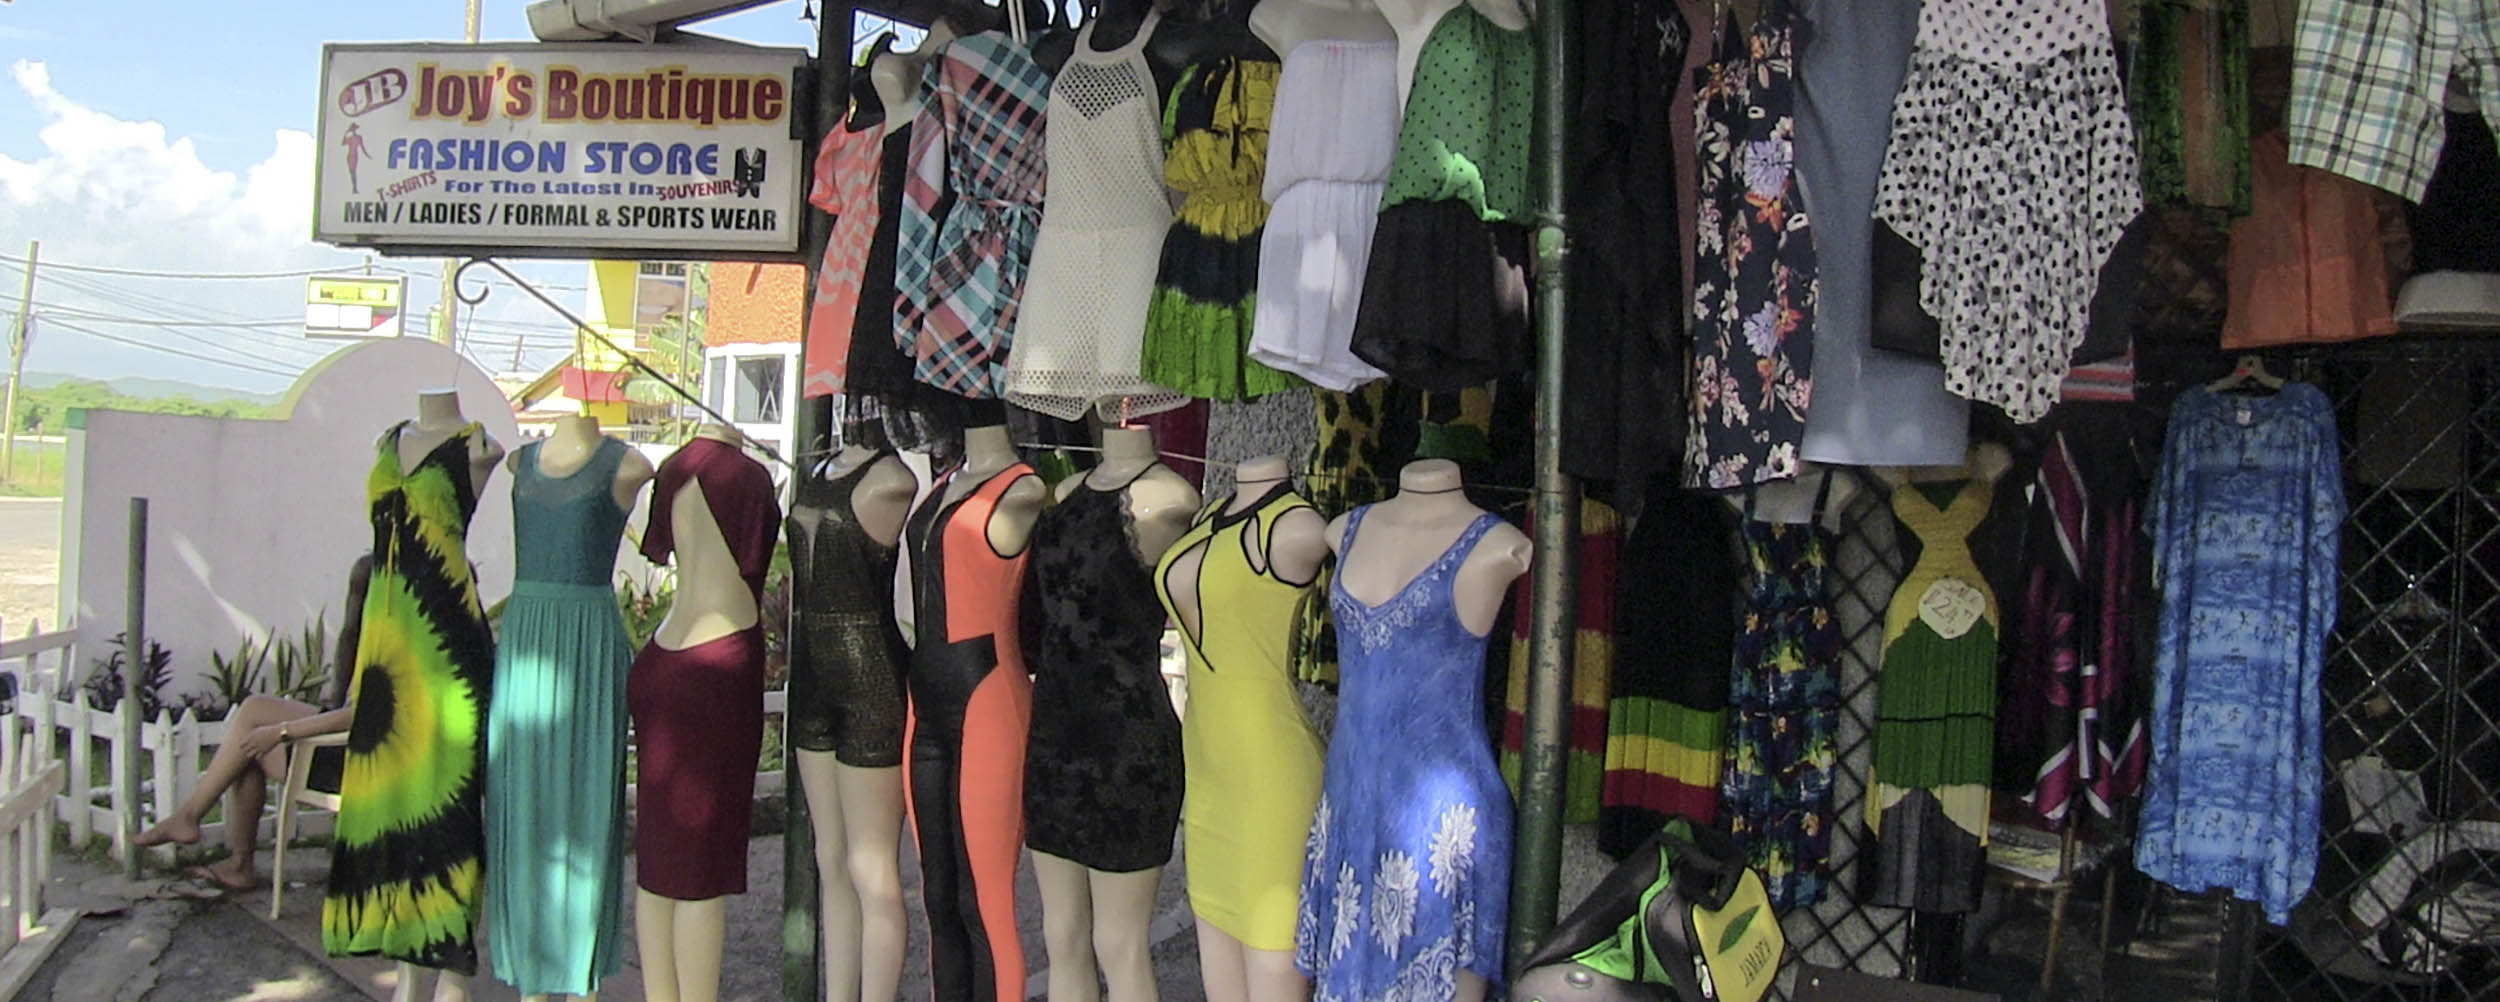 Joy Boutiqlue Fashion Store - Sunshine Village Complex - Negril Jamaica